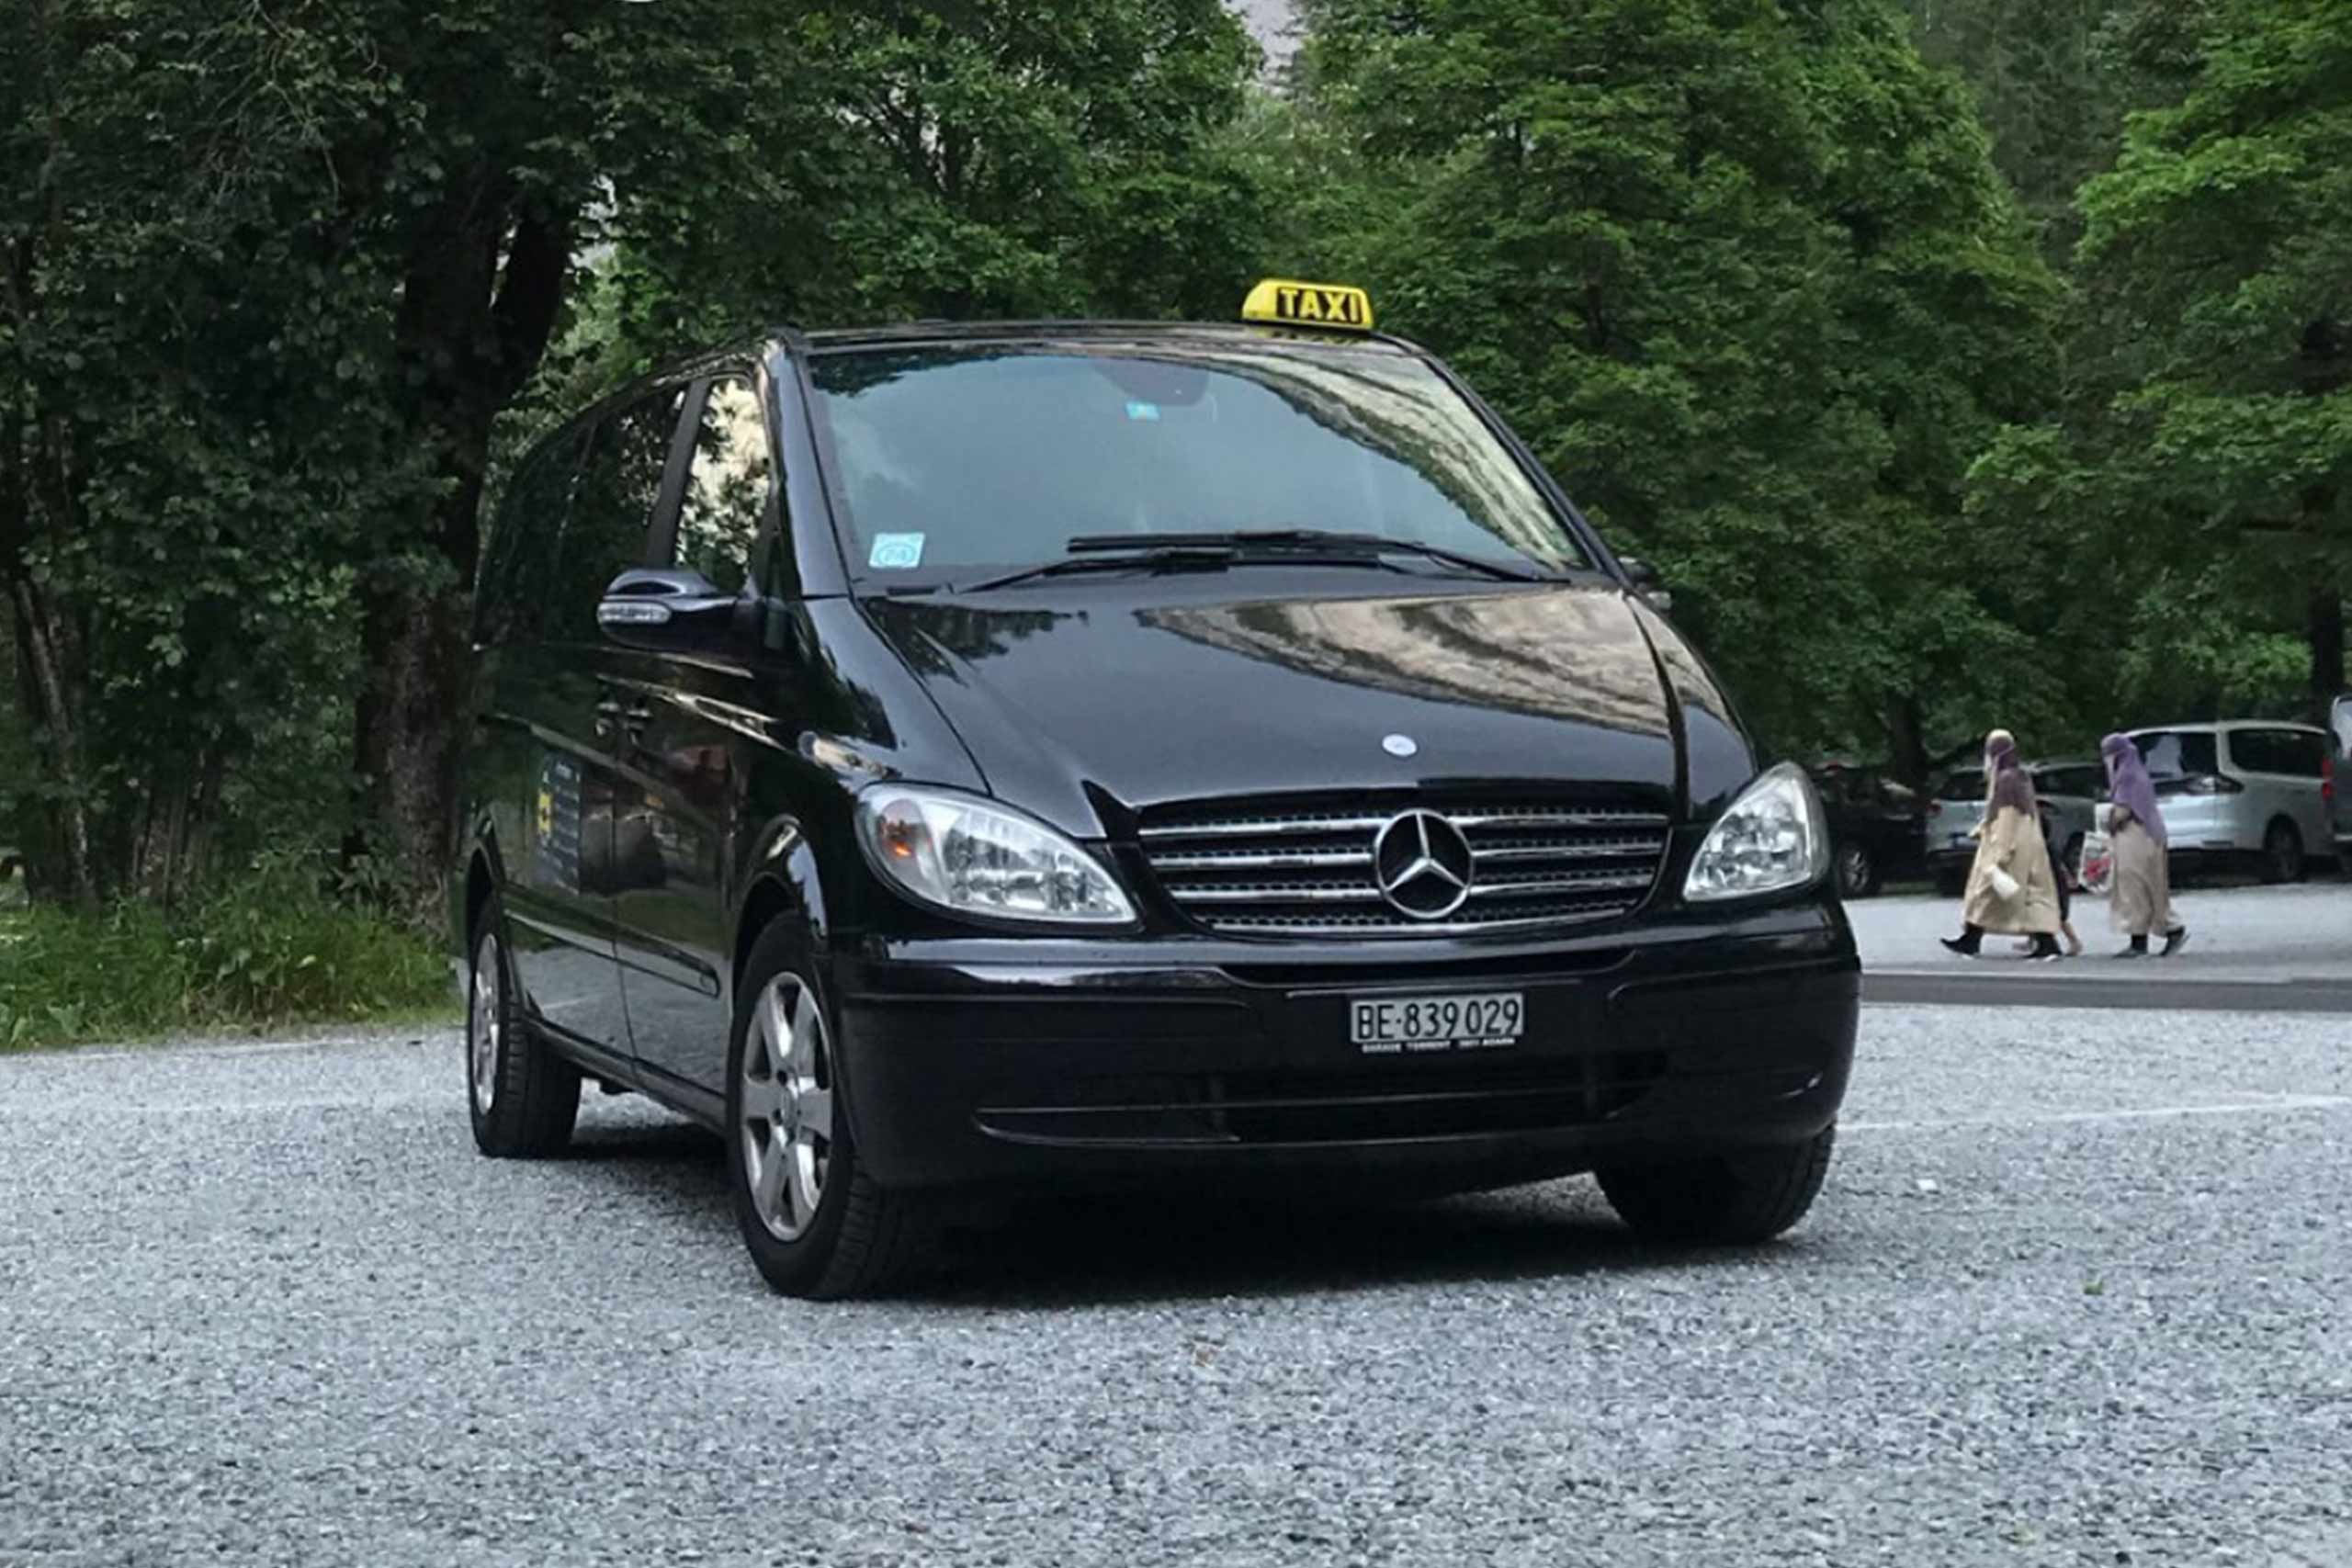 elan-taxi-fahrzeug-schwarz.jpg